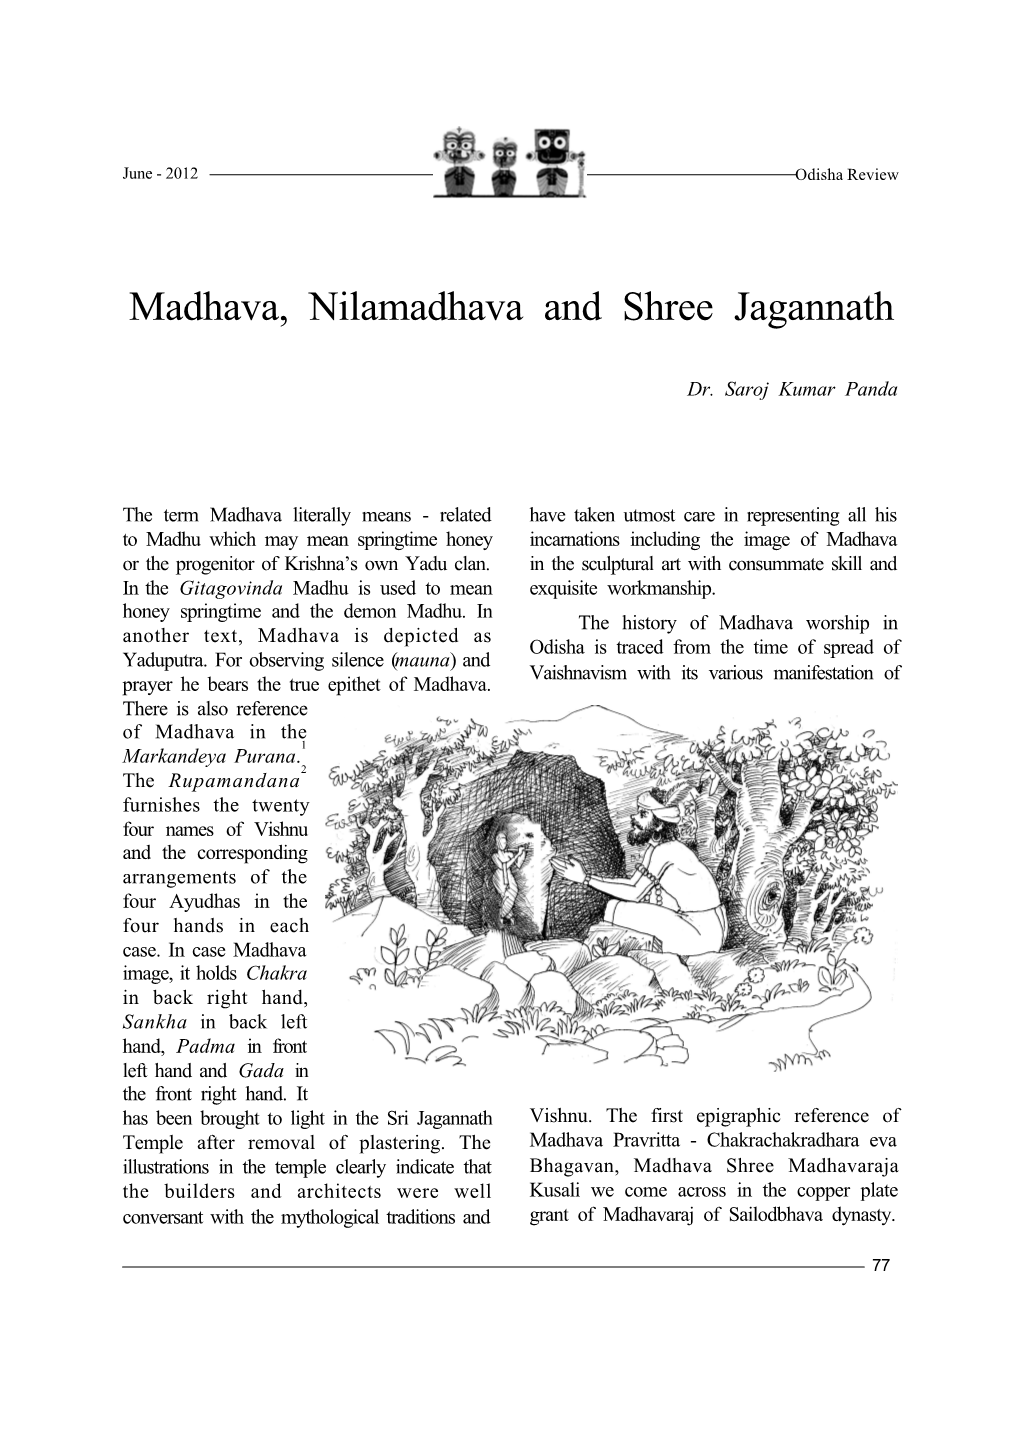 Madhava, Nilamadhava and Shree Jagannath